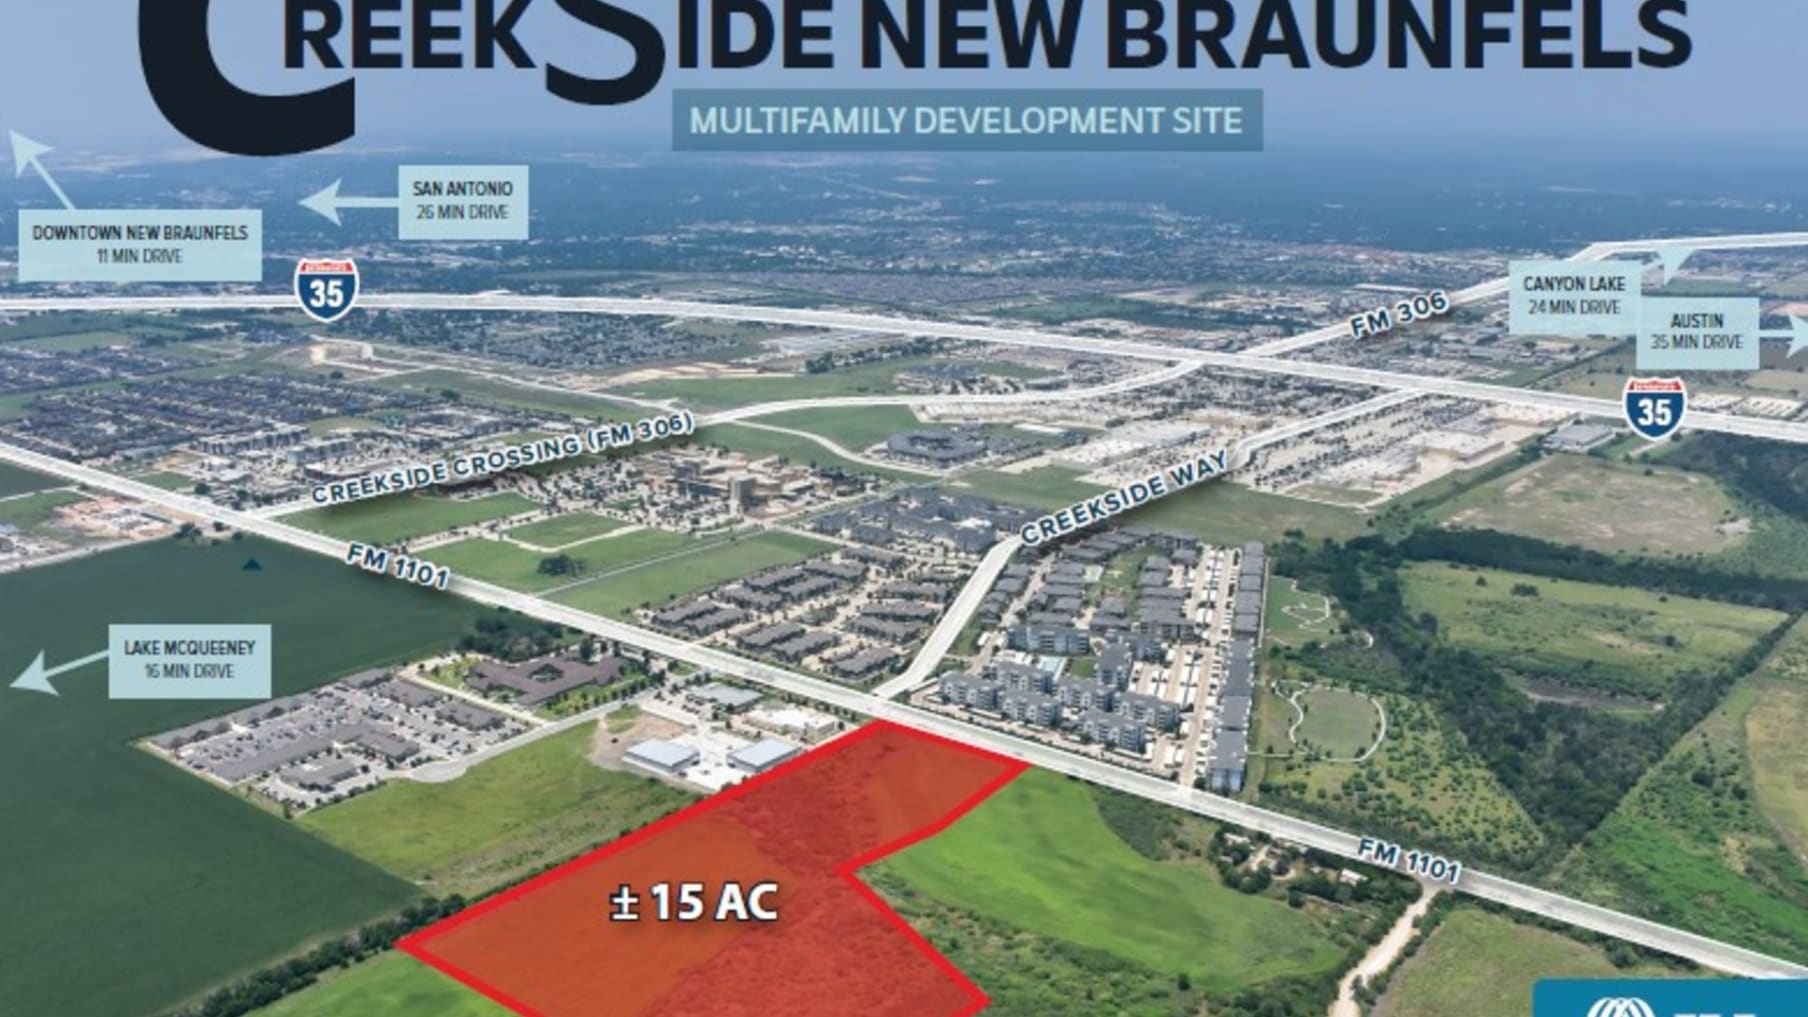 Creekside New Braunfels Land Site_Immobilie zu verkaufen